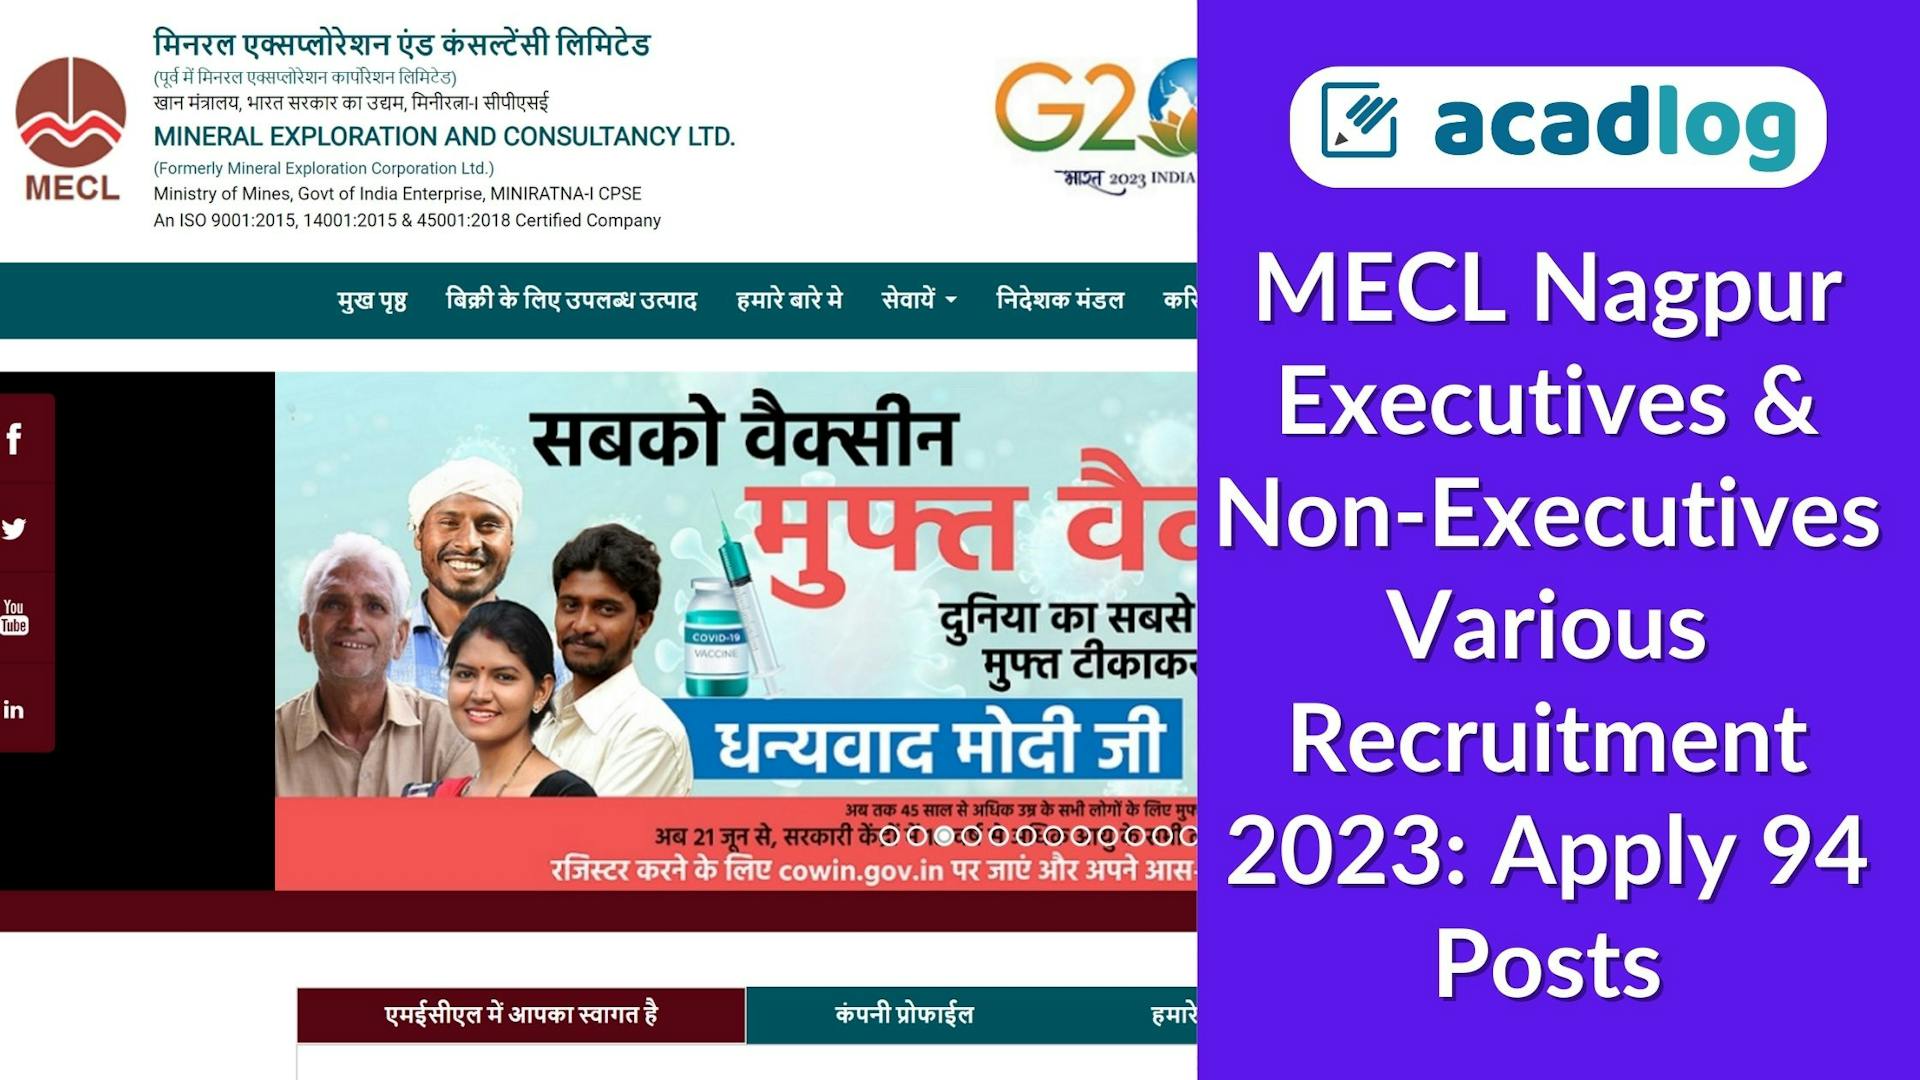 MECL Nagpur Executives & Non-Executives Various Recruitment 2023: Apply 94 Posts